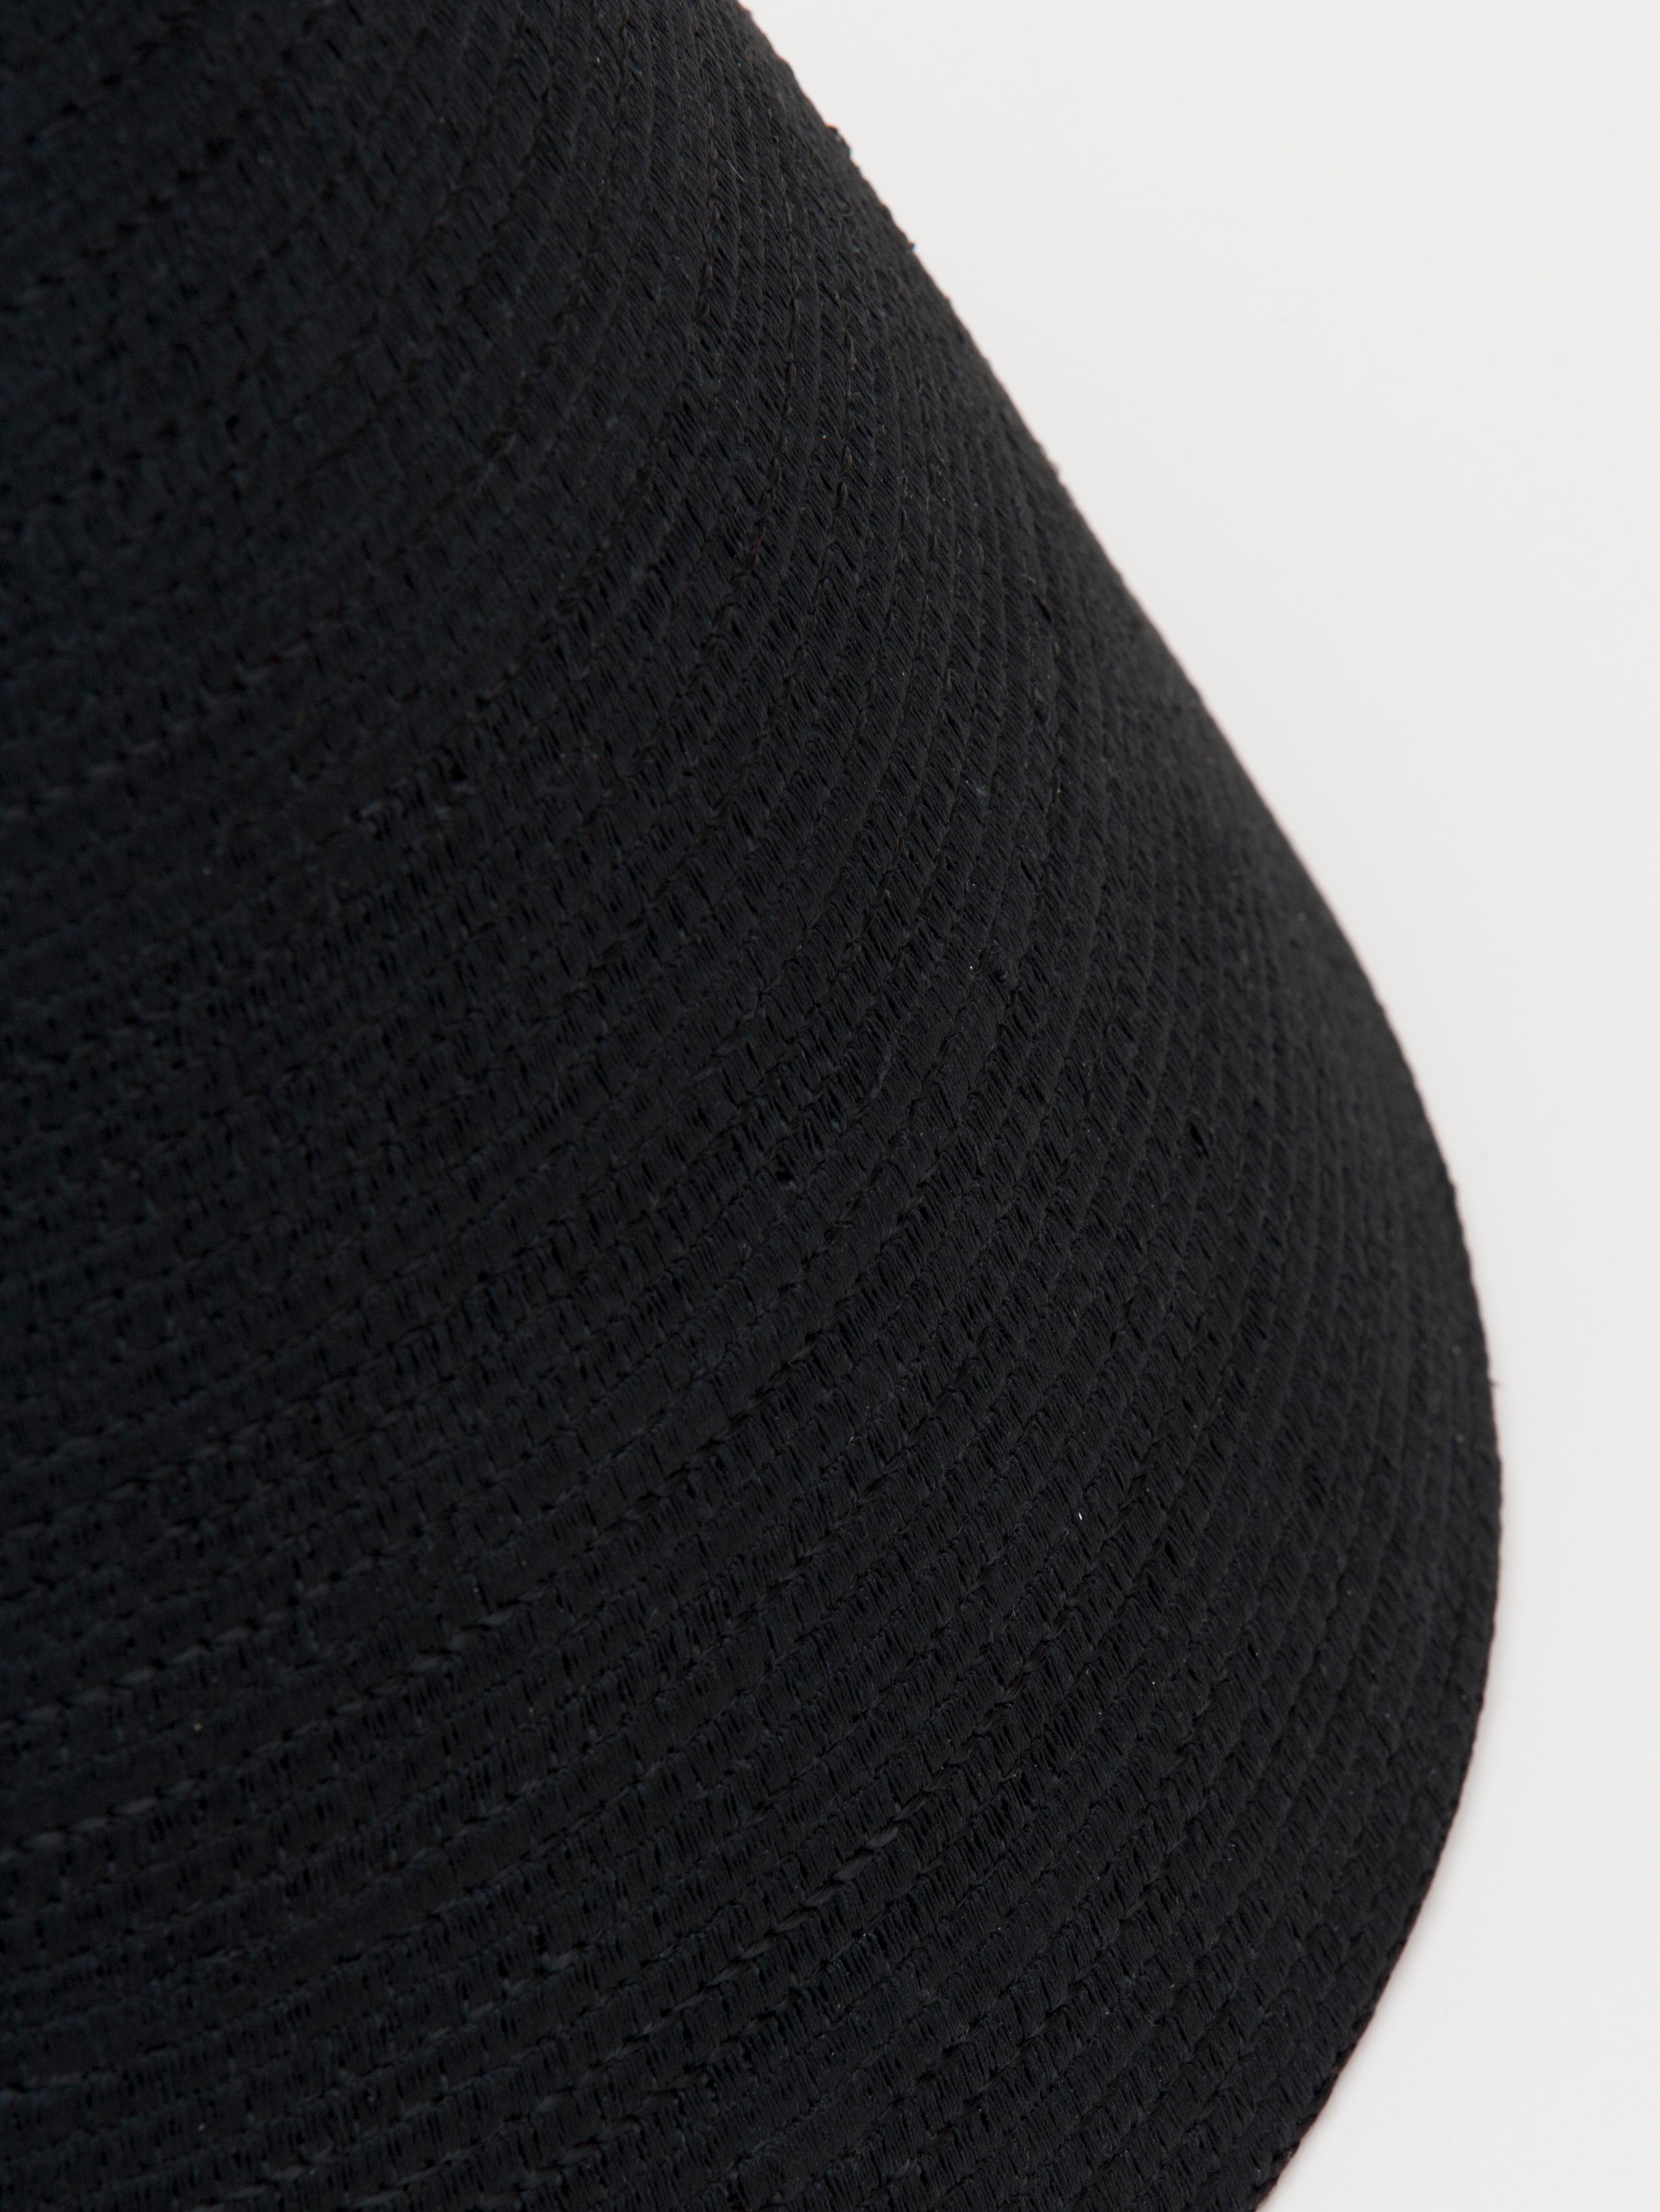 Nord-américain « Kogetsudai 'noir' », récipient sculptural en fibre enroulé en corde par Doug Johnston, 2015